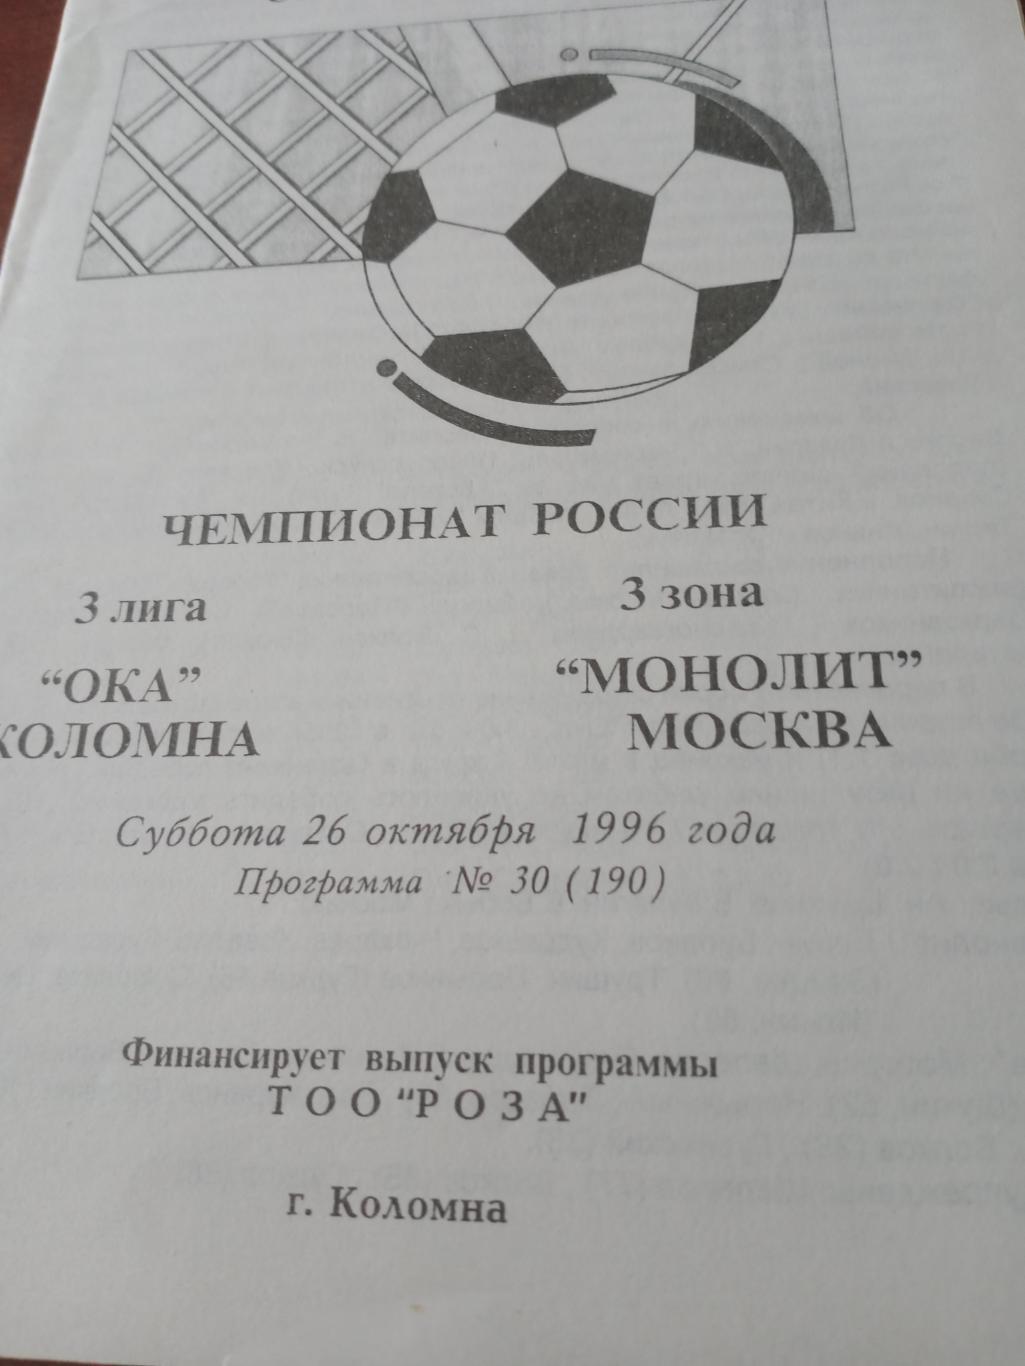 Ока Коломна - Монолит Москва. 26 октября 1996 год